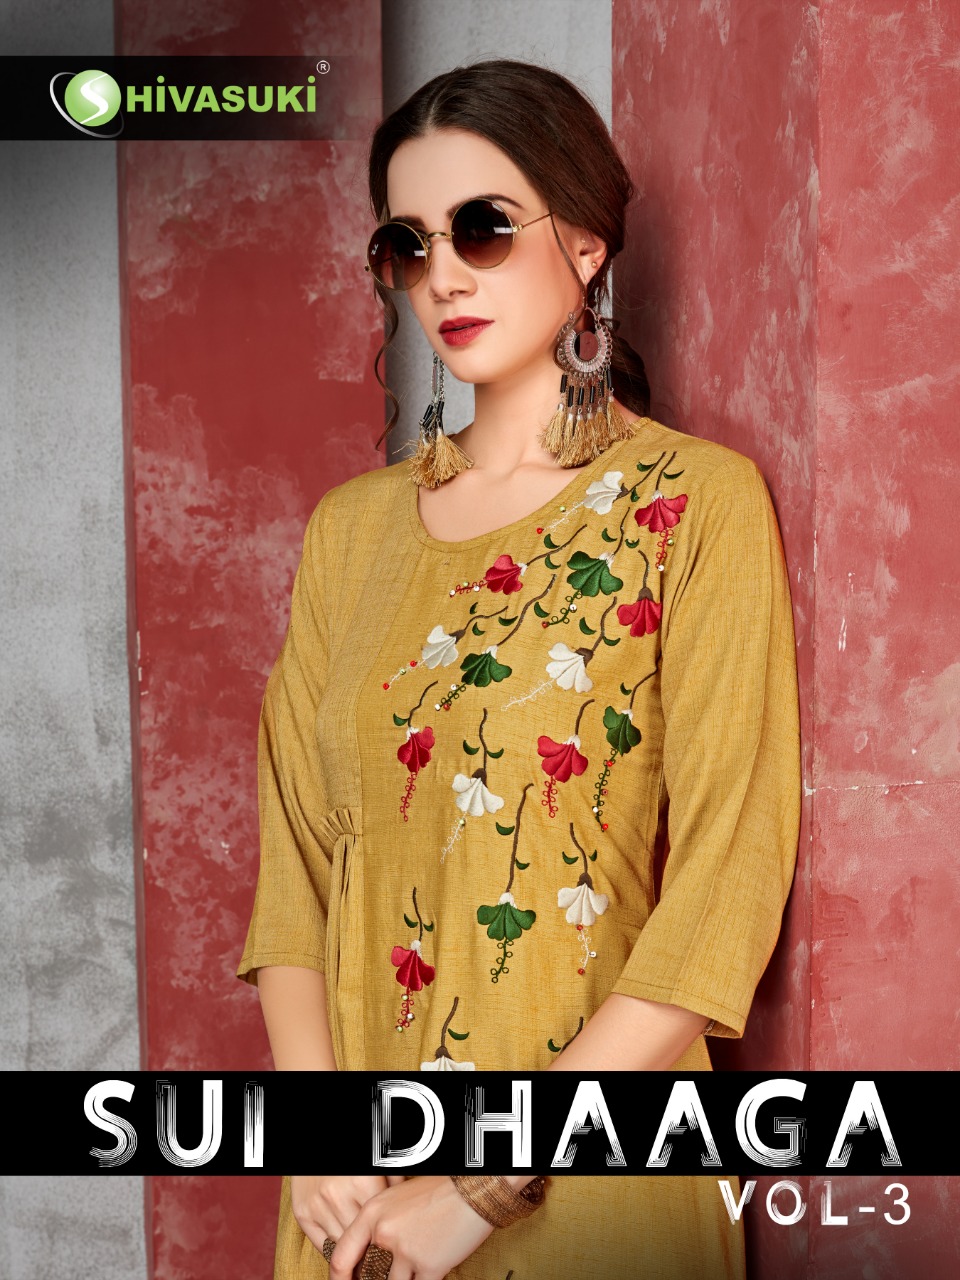 Shivasuki looks sui dhaga vol 3 rayon long gown collection